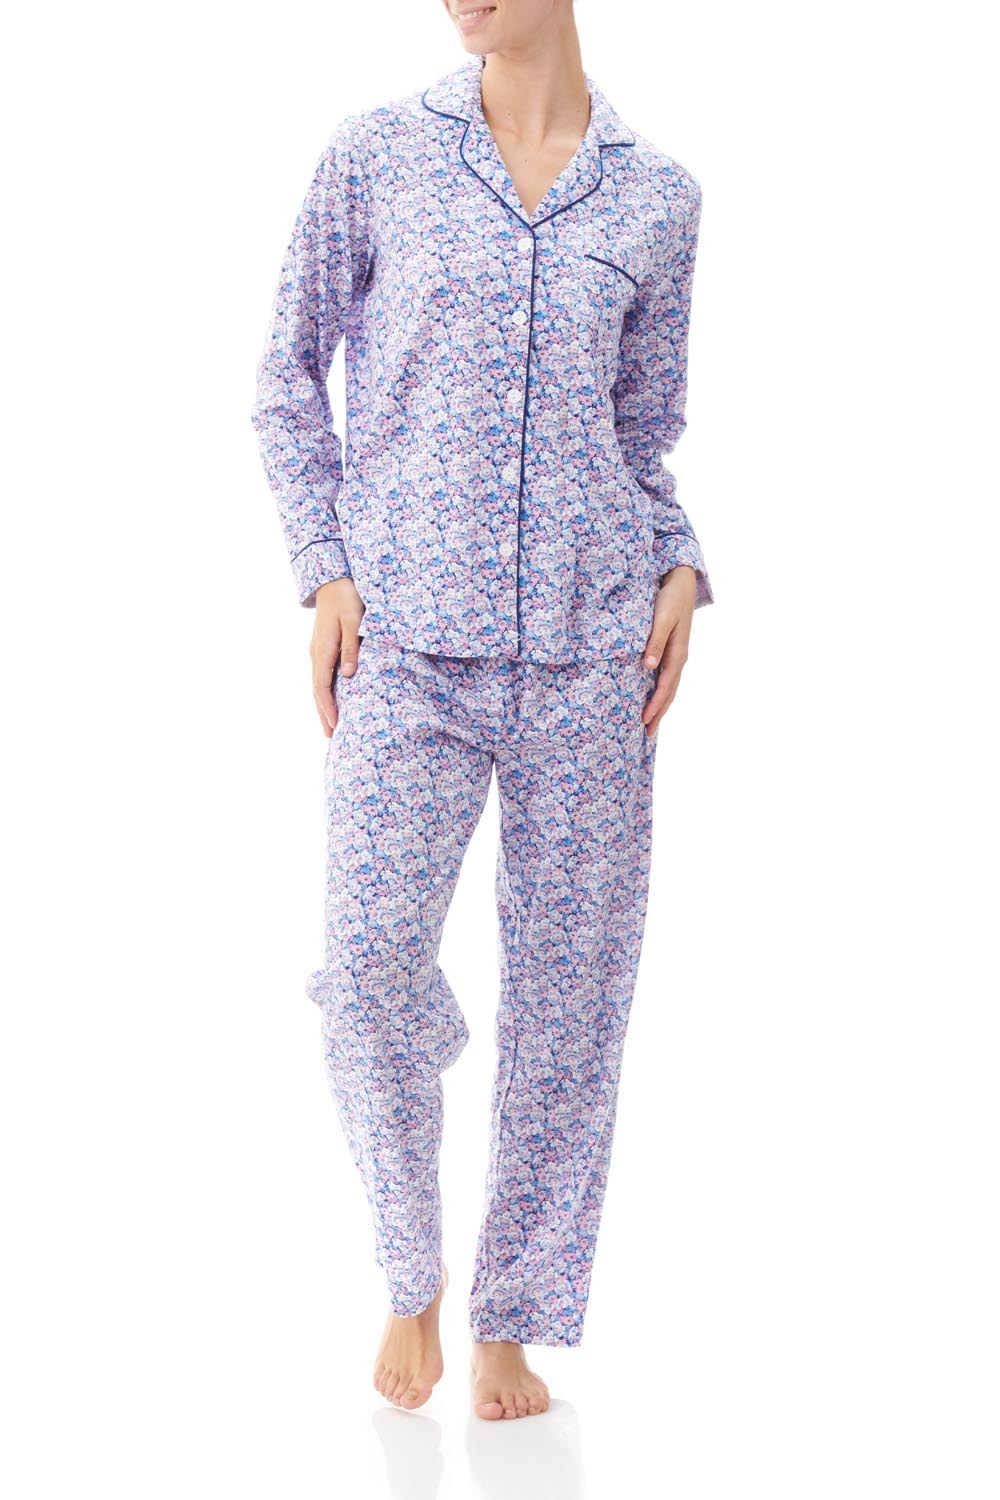 Ladies Givoni Cotton Long Length Nightie PJS Pink Blue Floral (Kara 30K)